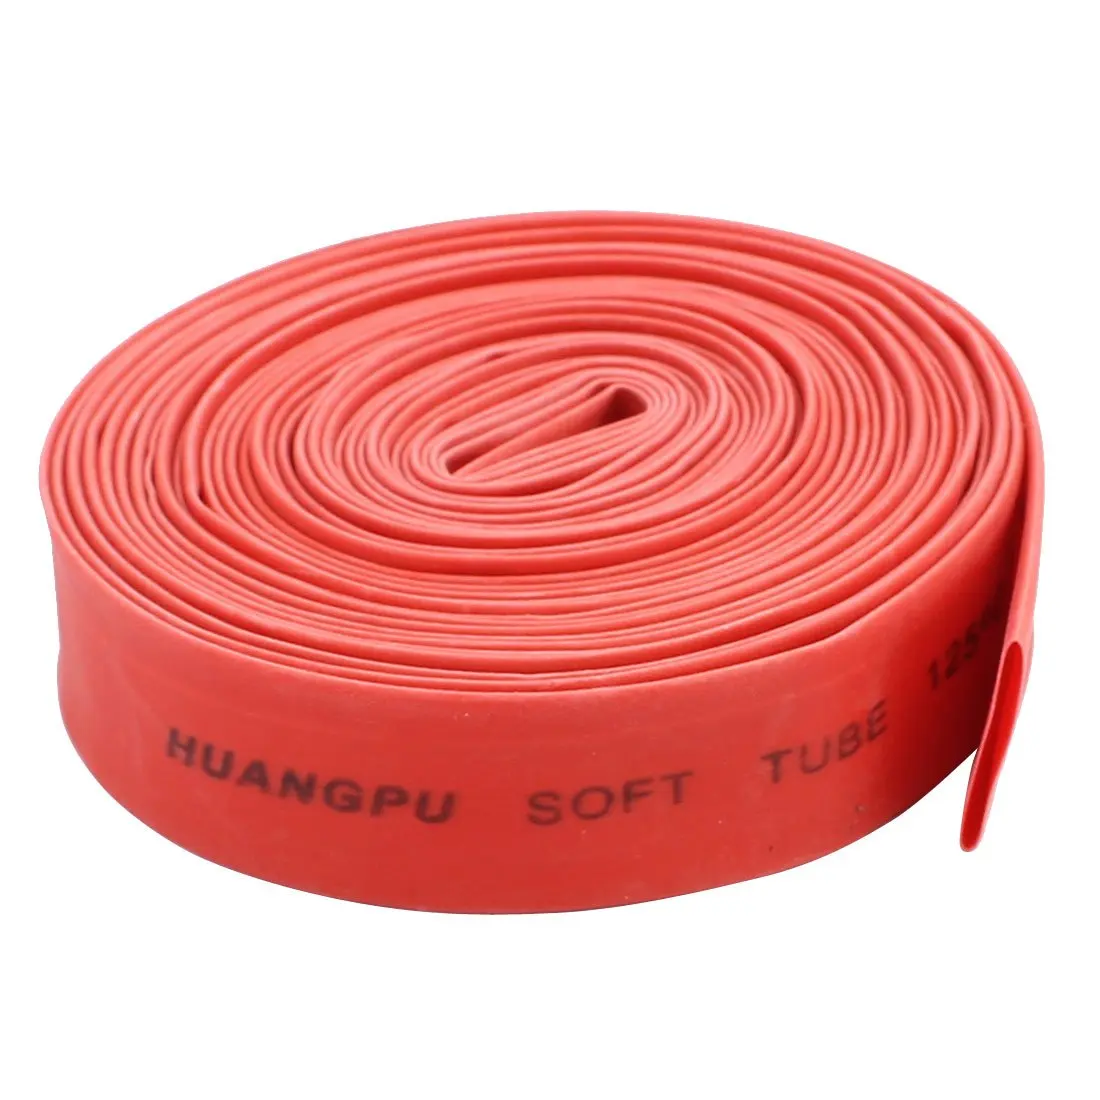 

Keszoox 10mm Diameter 125C PVC Heat Shrink Tube Tubing Battery Wrap Red 3.9M Length